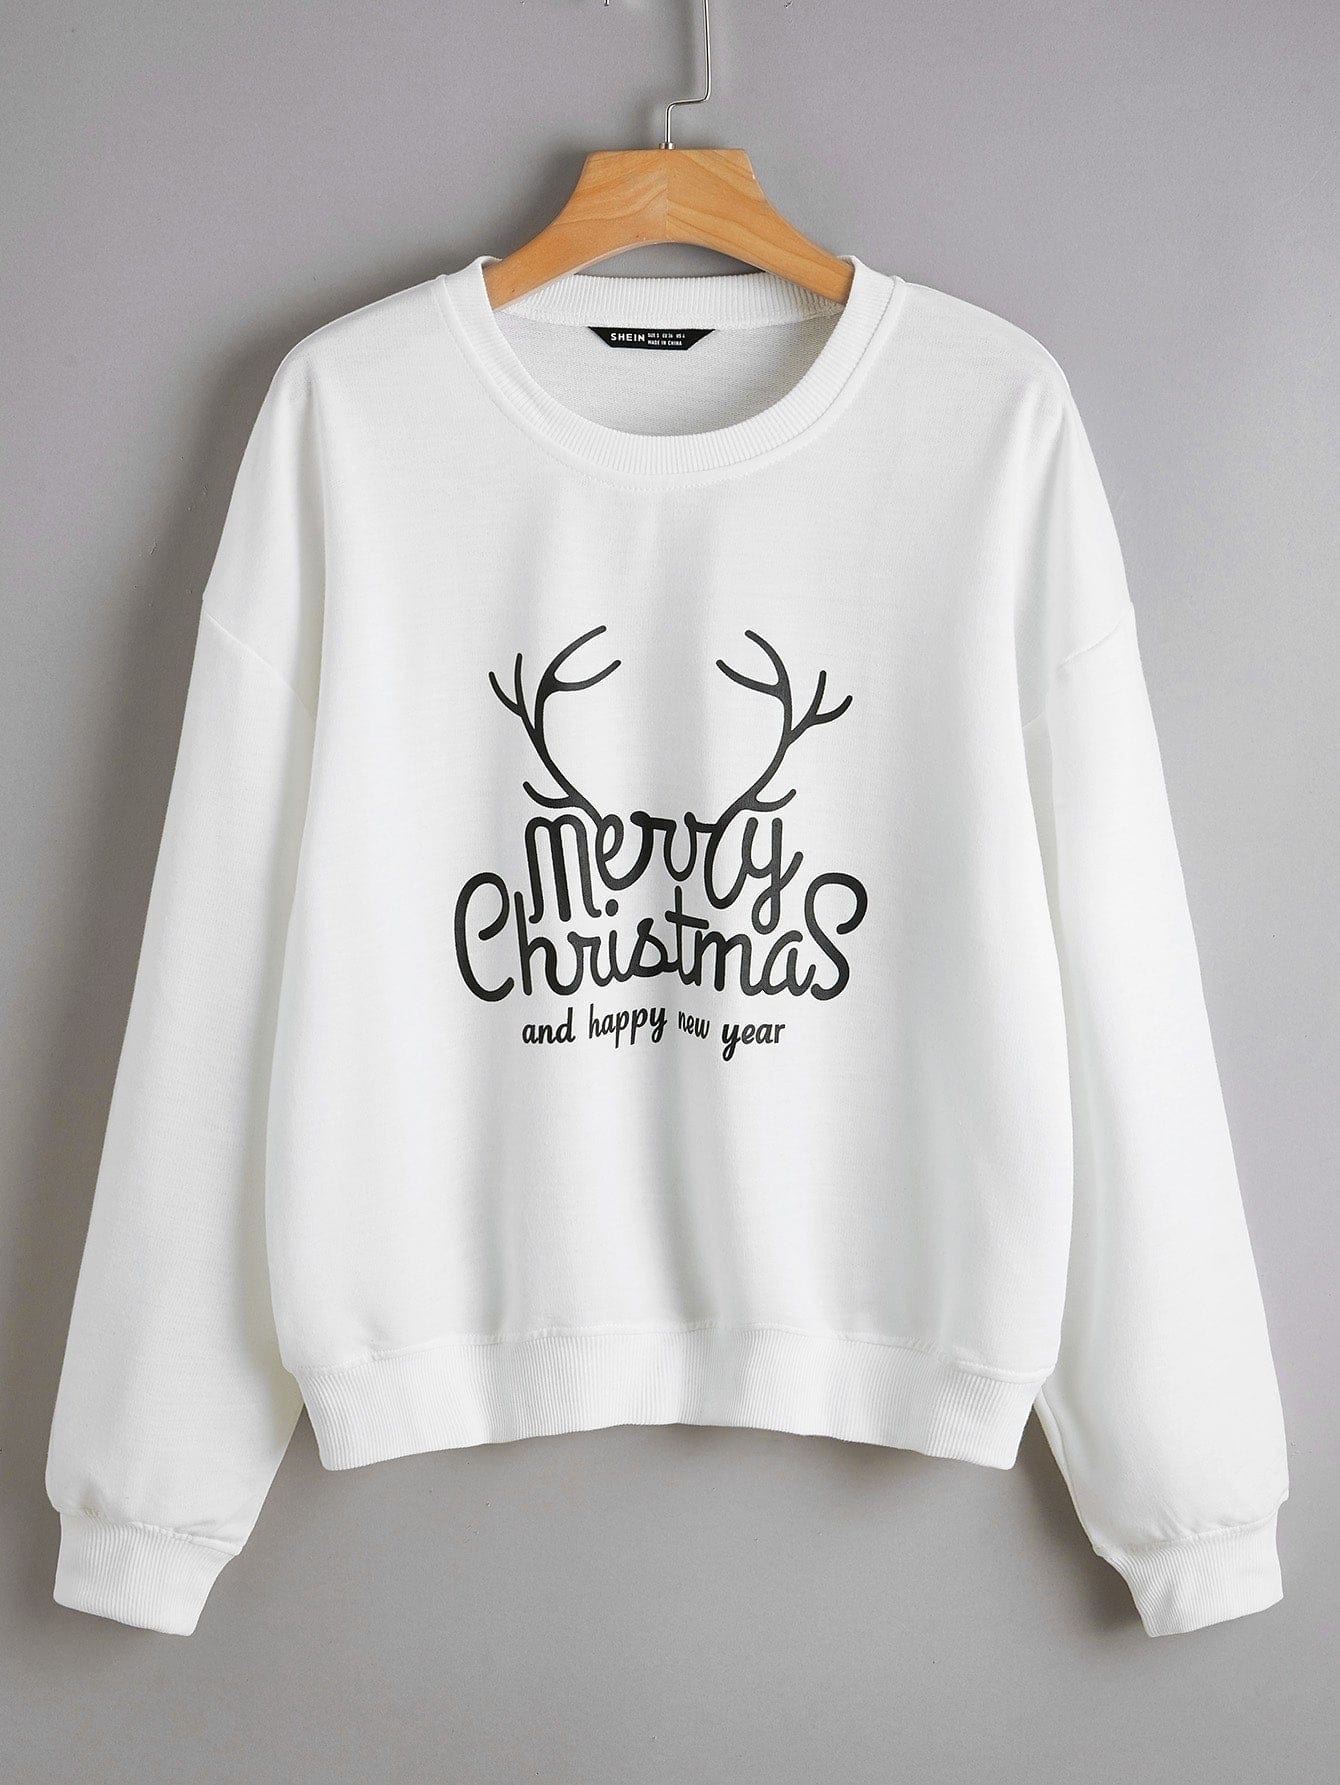 Aili S / White Christmas New Long Sleeve Sweater Loose Girl Cartoon Sweater Round Neck Printed